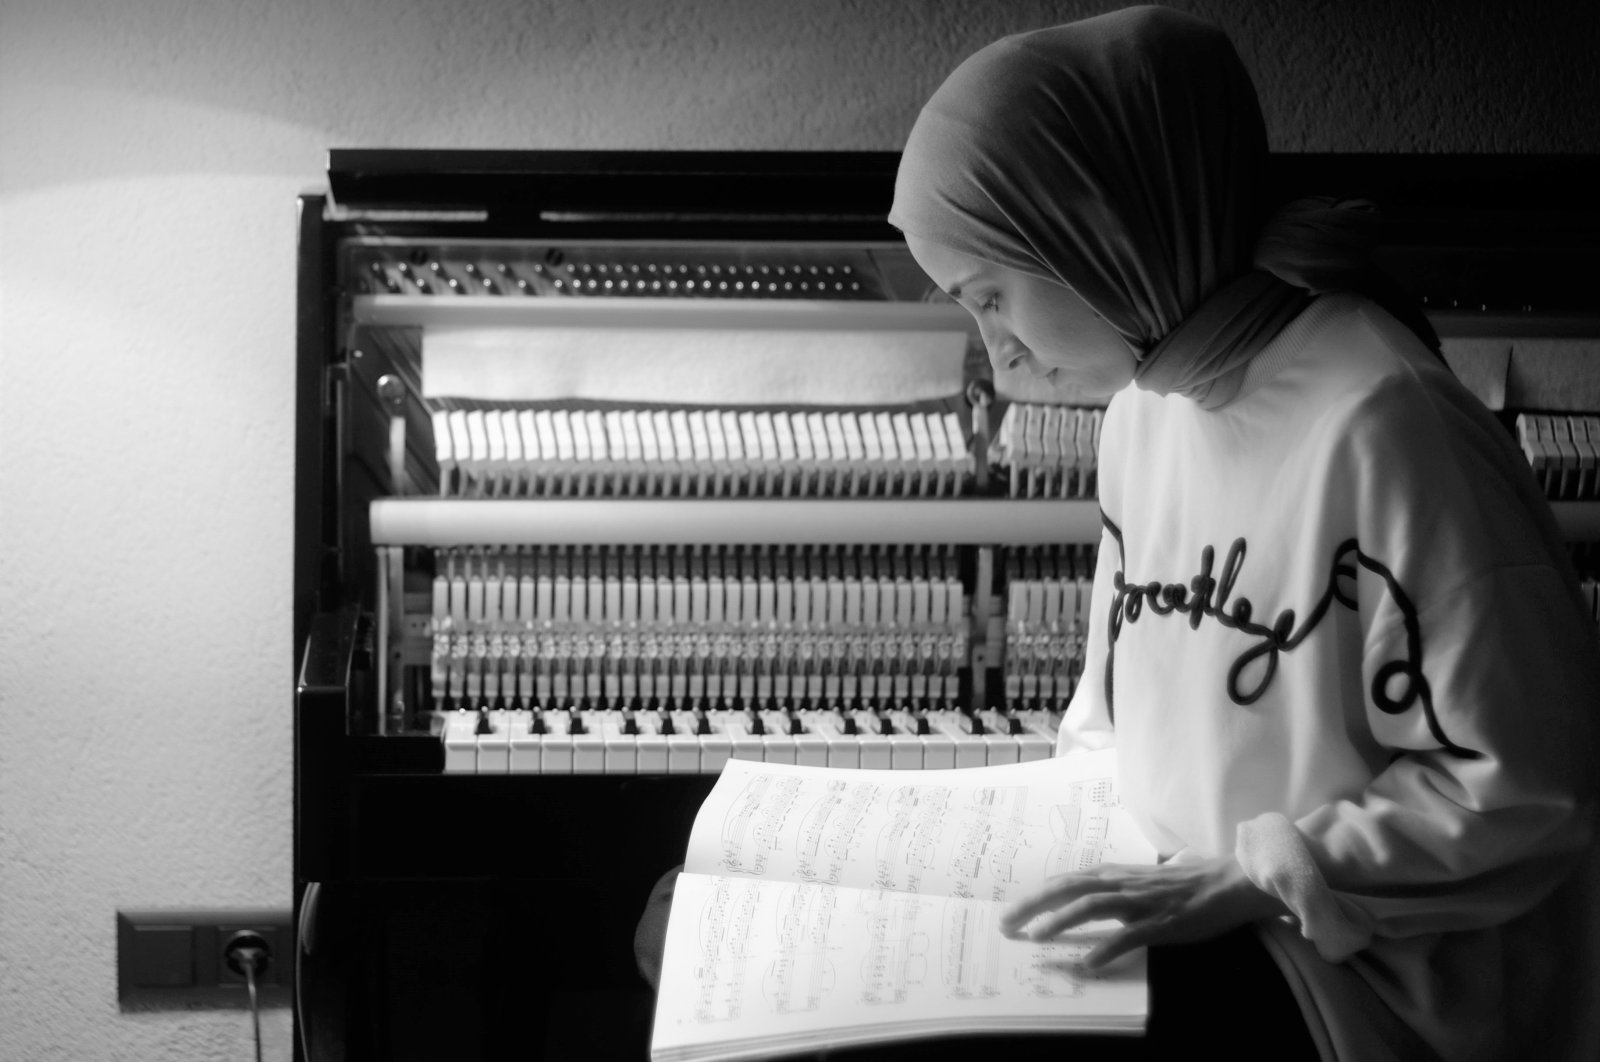 Büşra Kayıkçı poses with a music notebook in front of her piano. (Courtesy of Büşra Kayıkçı) 